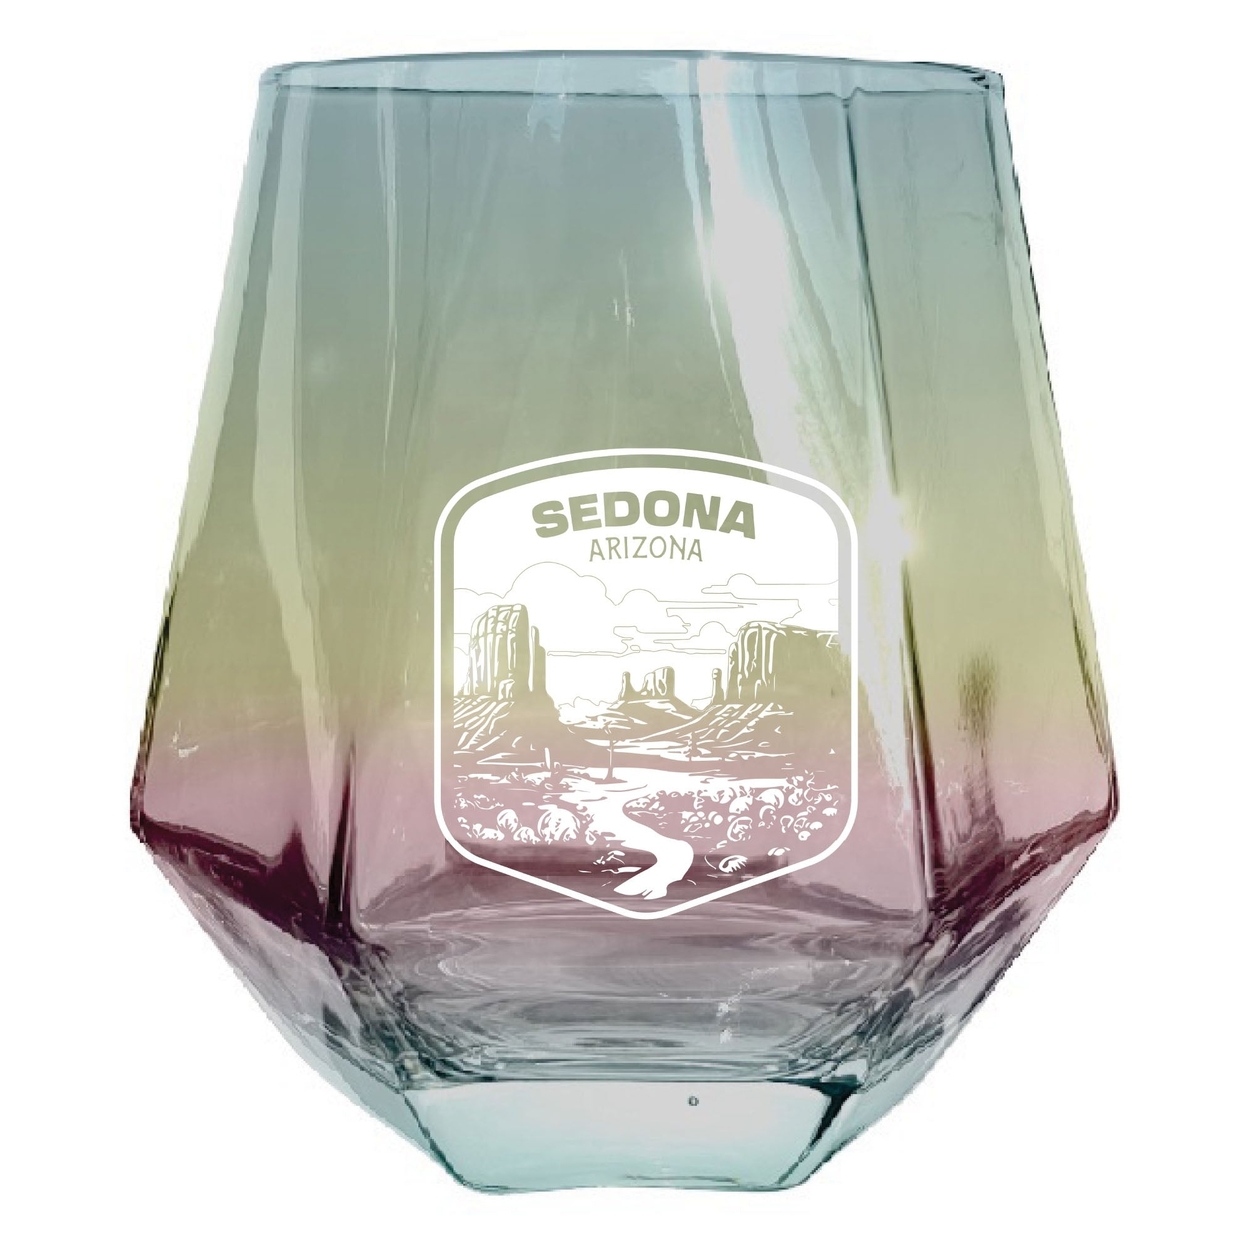 Sedona Arizona Souvenir Wine Glass EngravedDiamond 15 Oz Clear Iridescent - Iridescent,,2-Pack